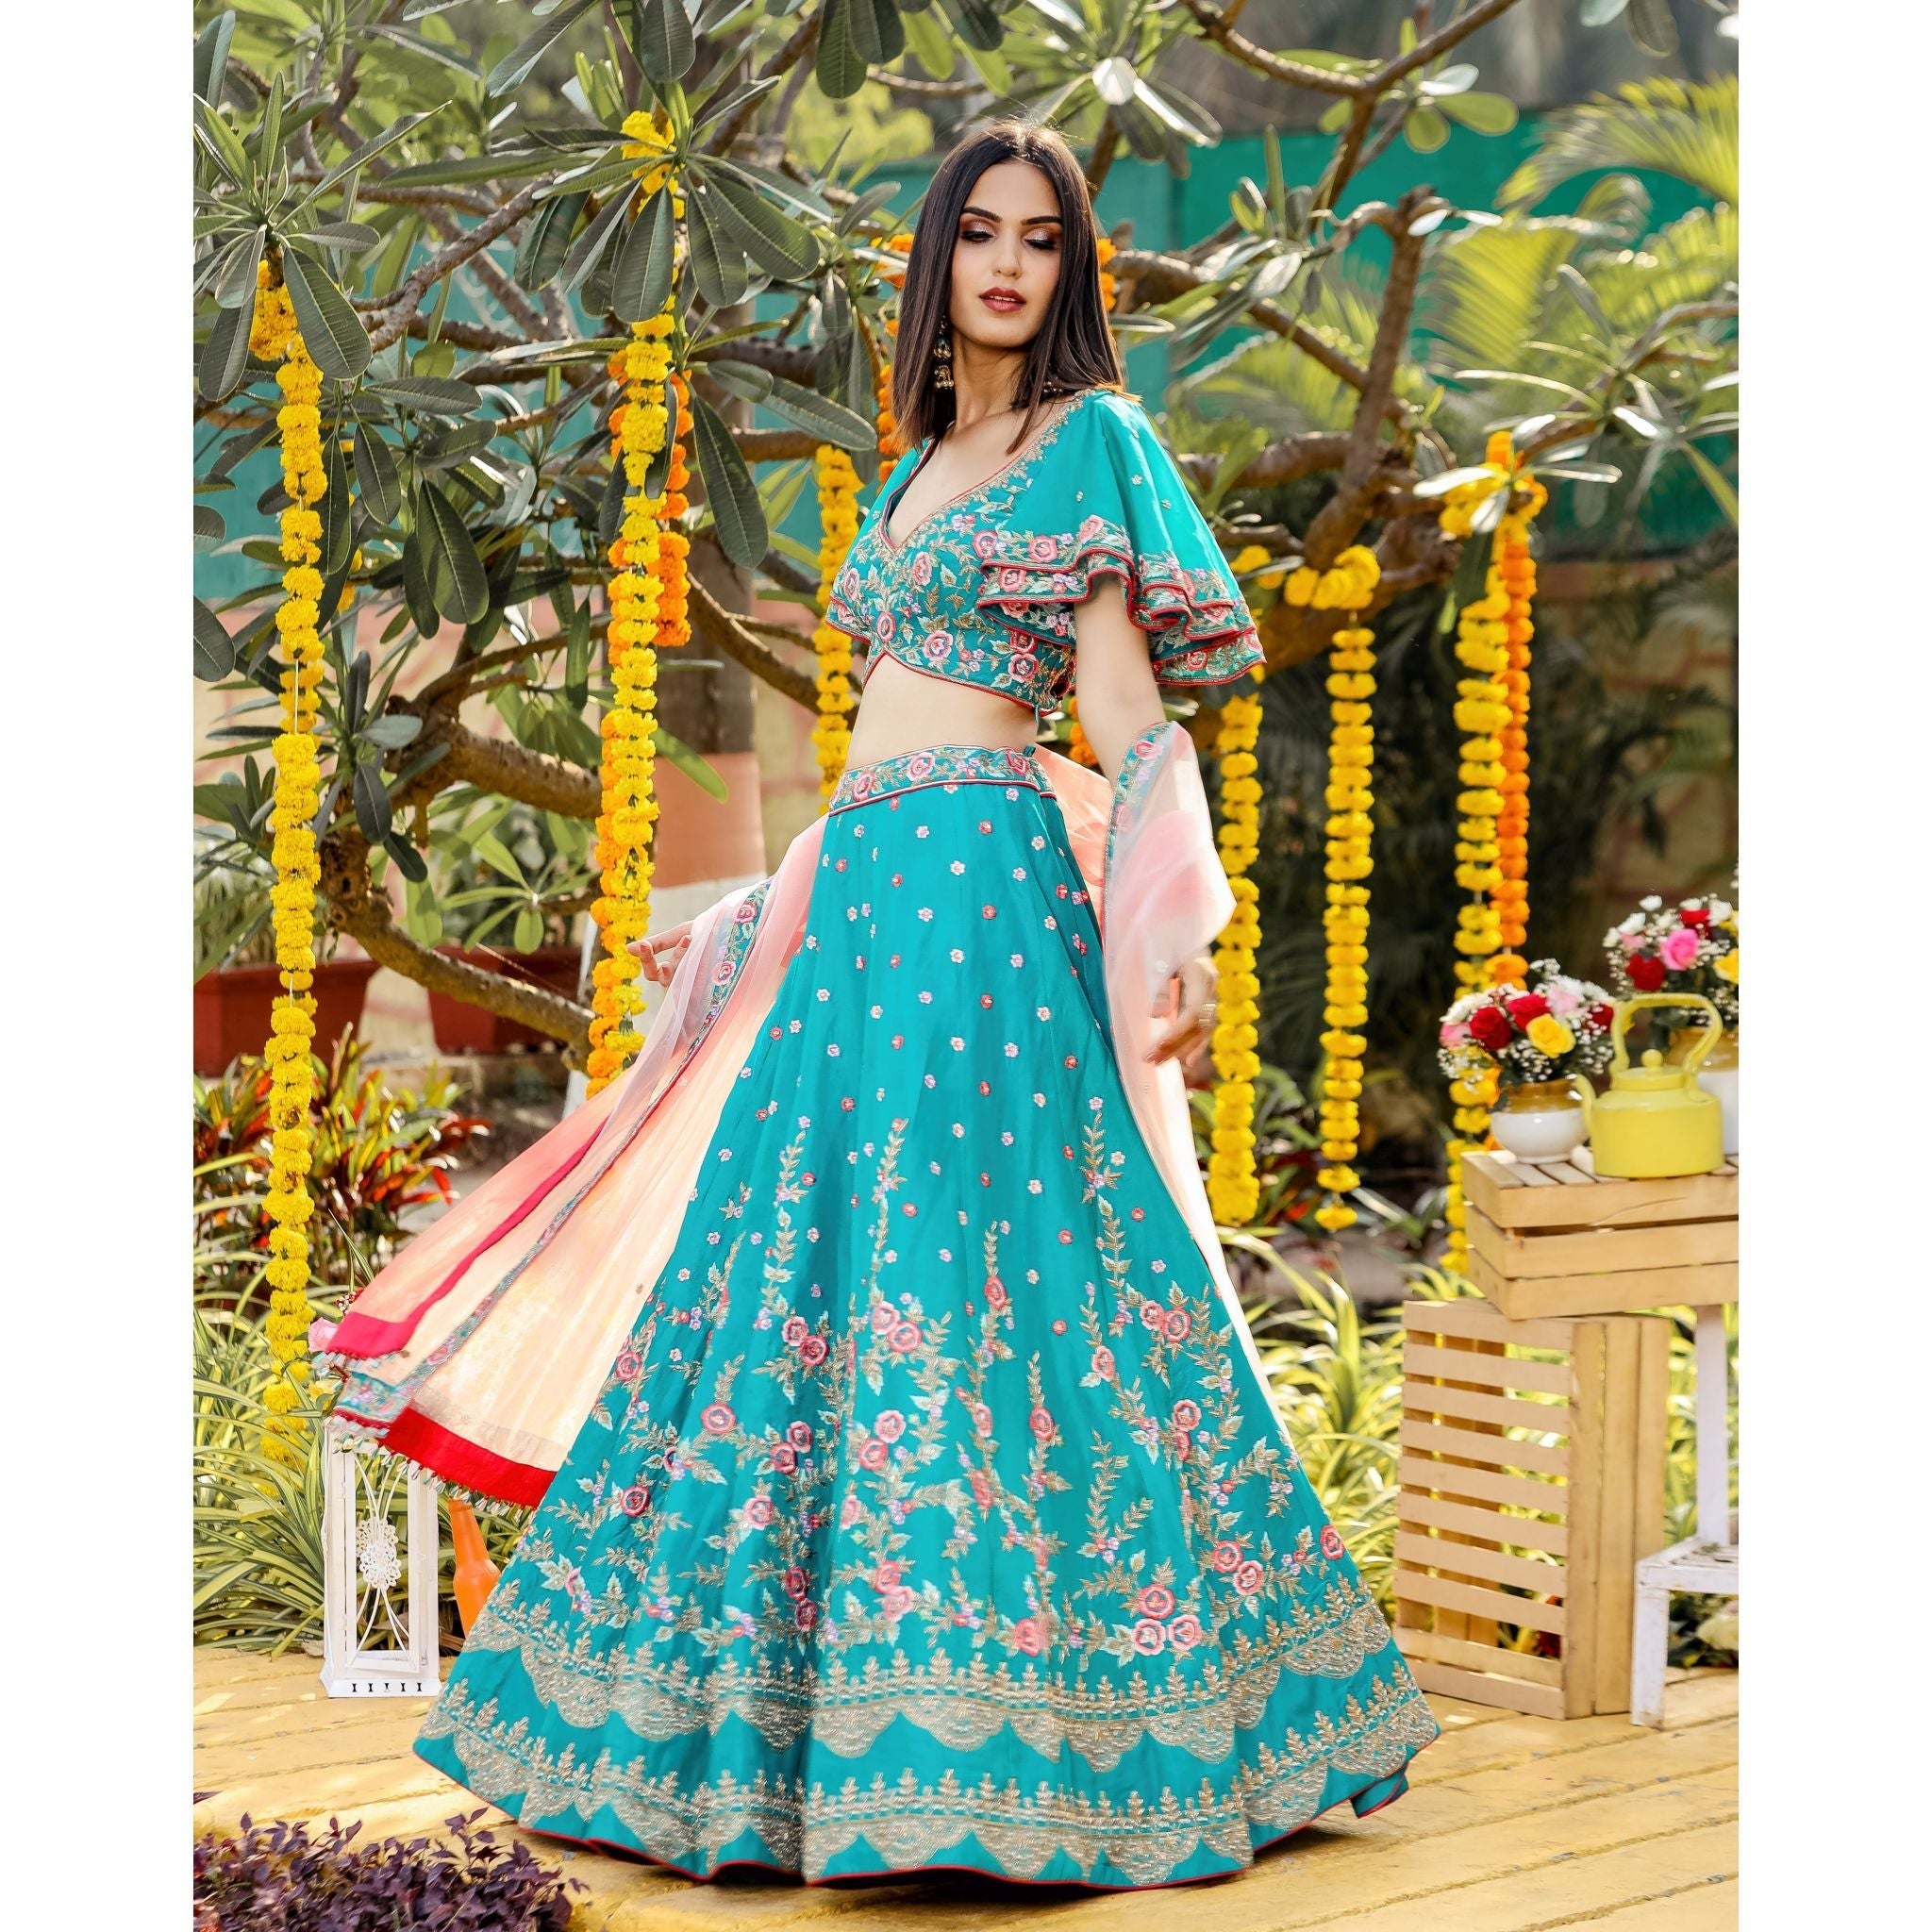 Teal Green Flared Lehenga Set - Indian Designer Bridal Wedding Outfit